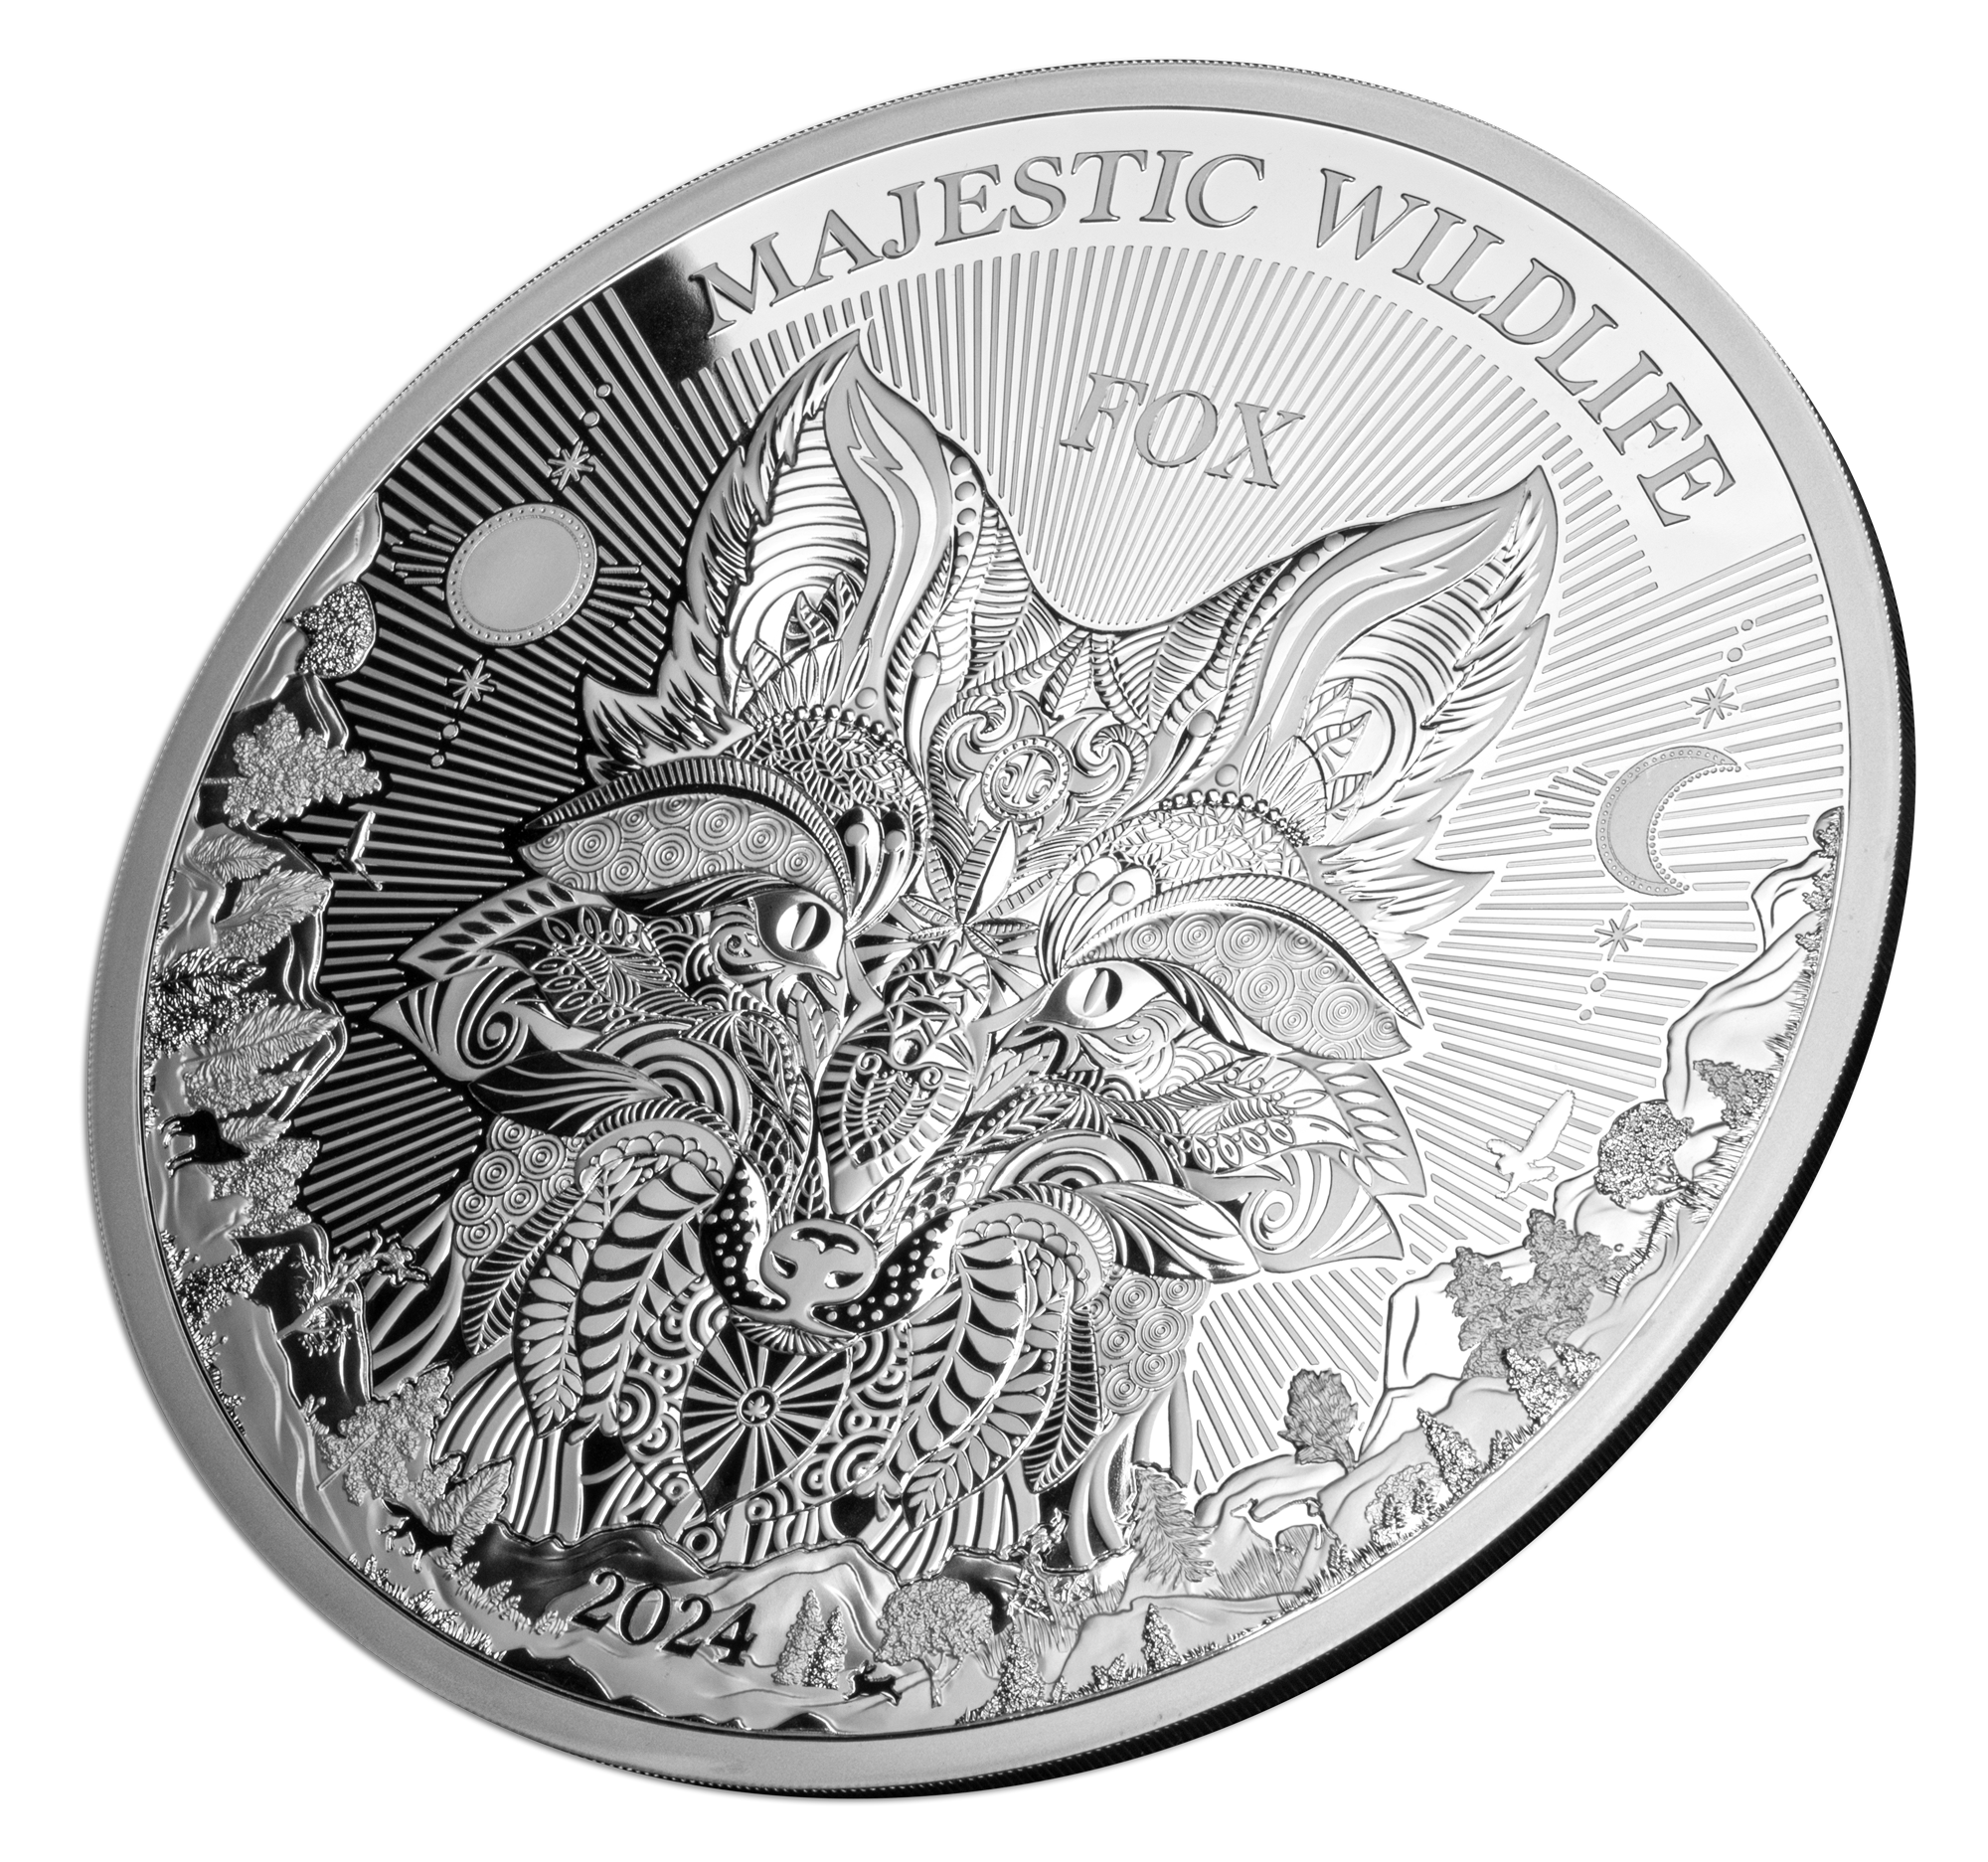 FOX Majestic Wildlife 1 Kg Kilo Silver Coin $25 Samoa 2024